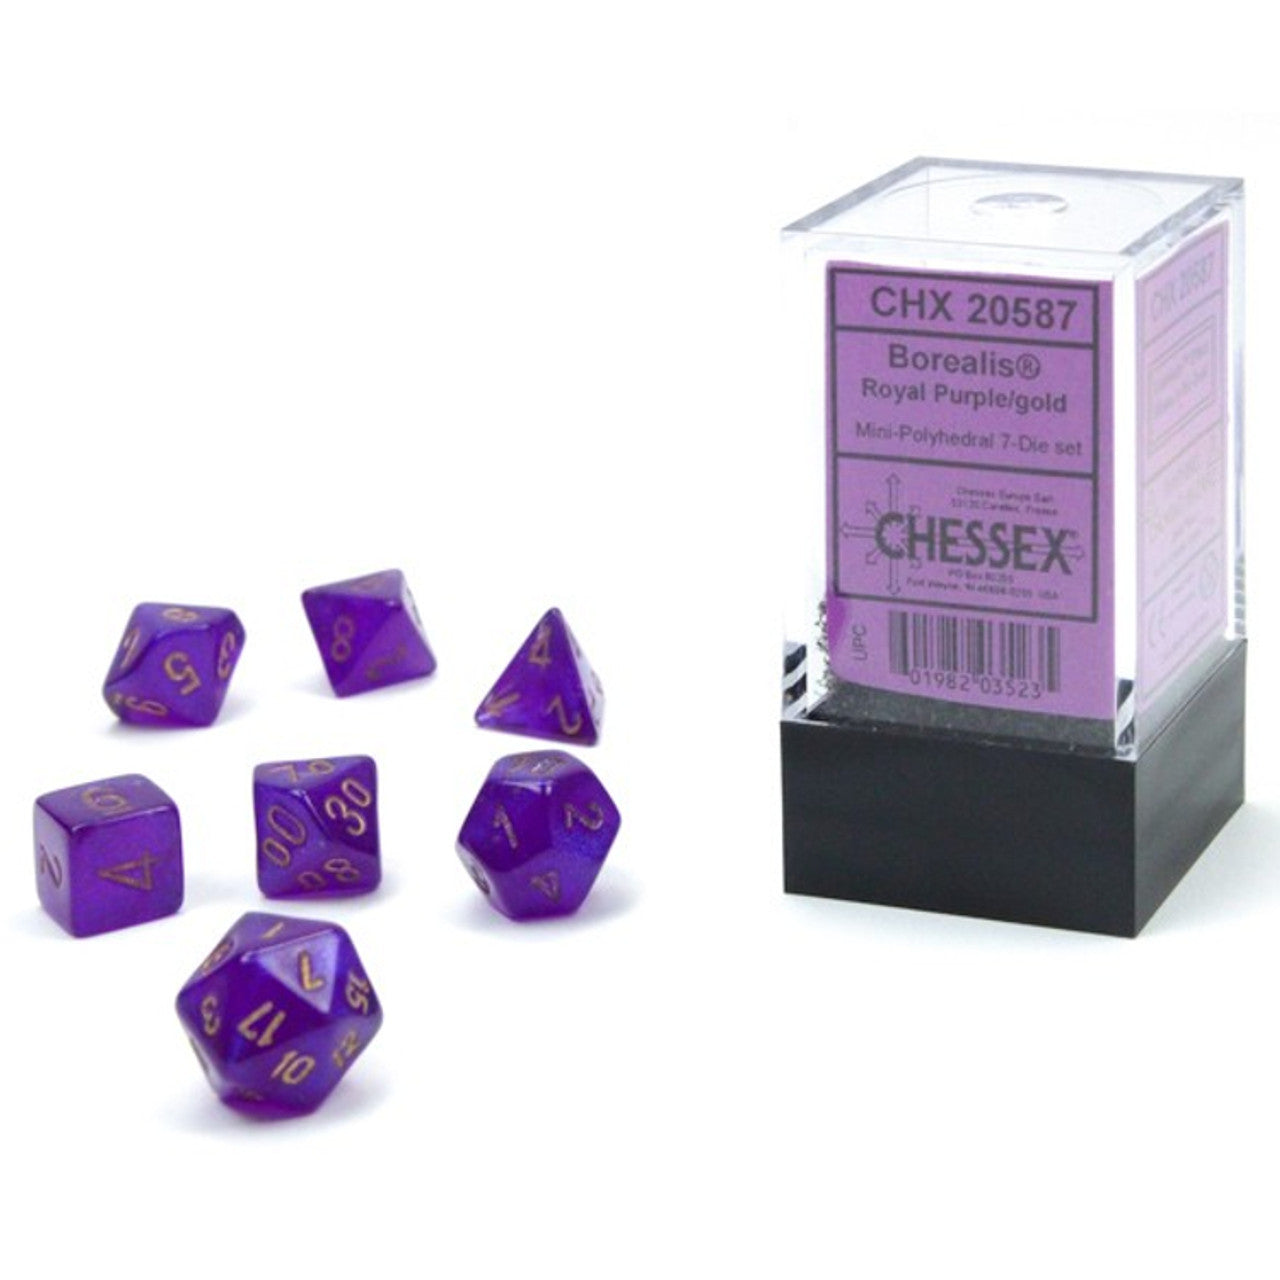 Chessex Dice: Borealis - Mini Polyhedral Royal Purple/Gold (7)